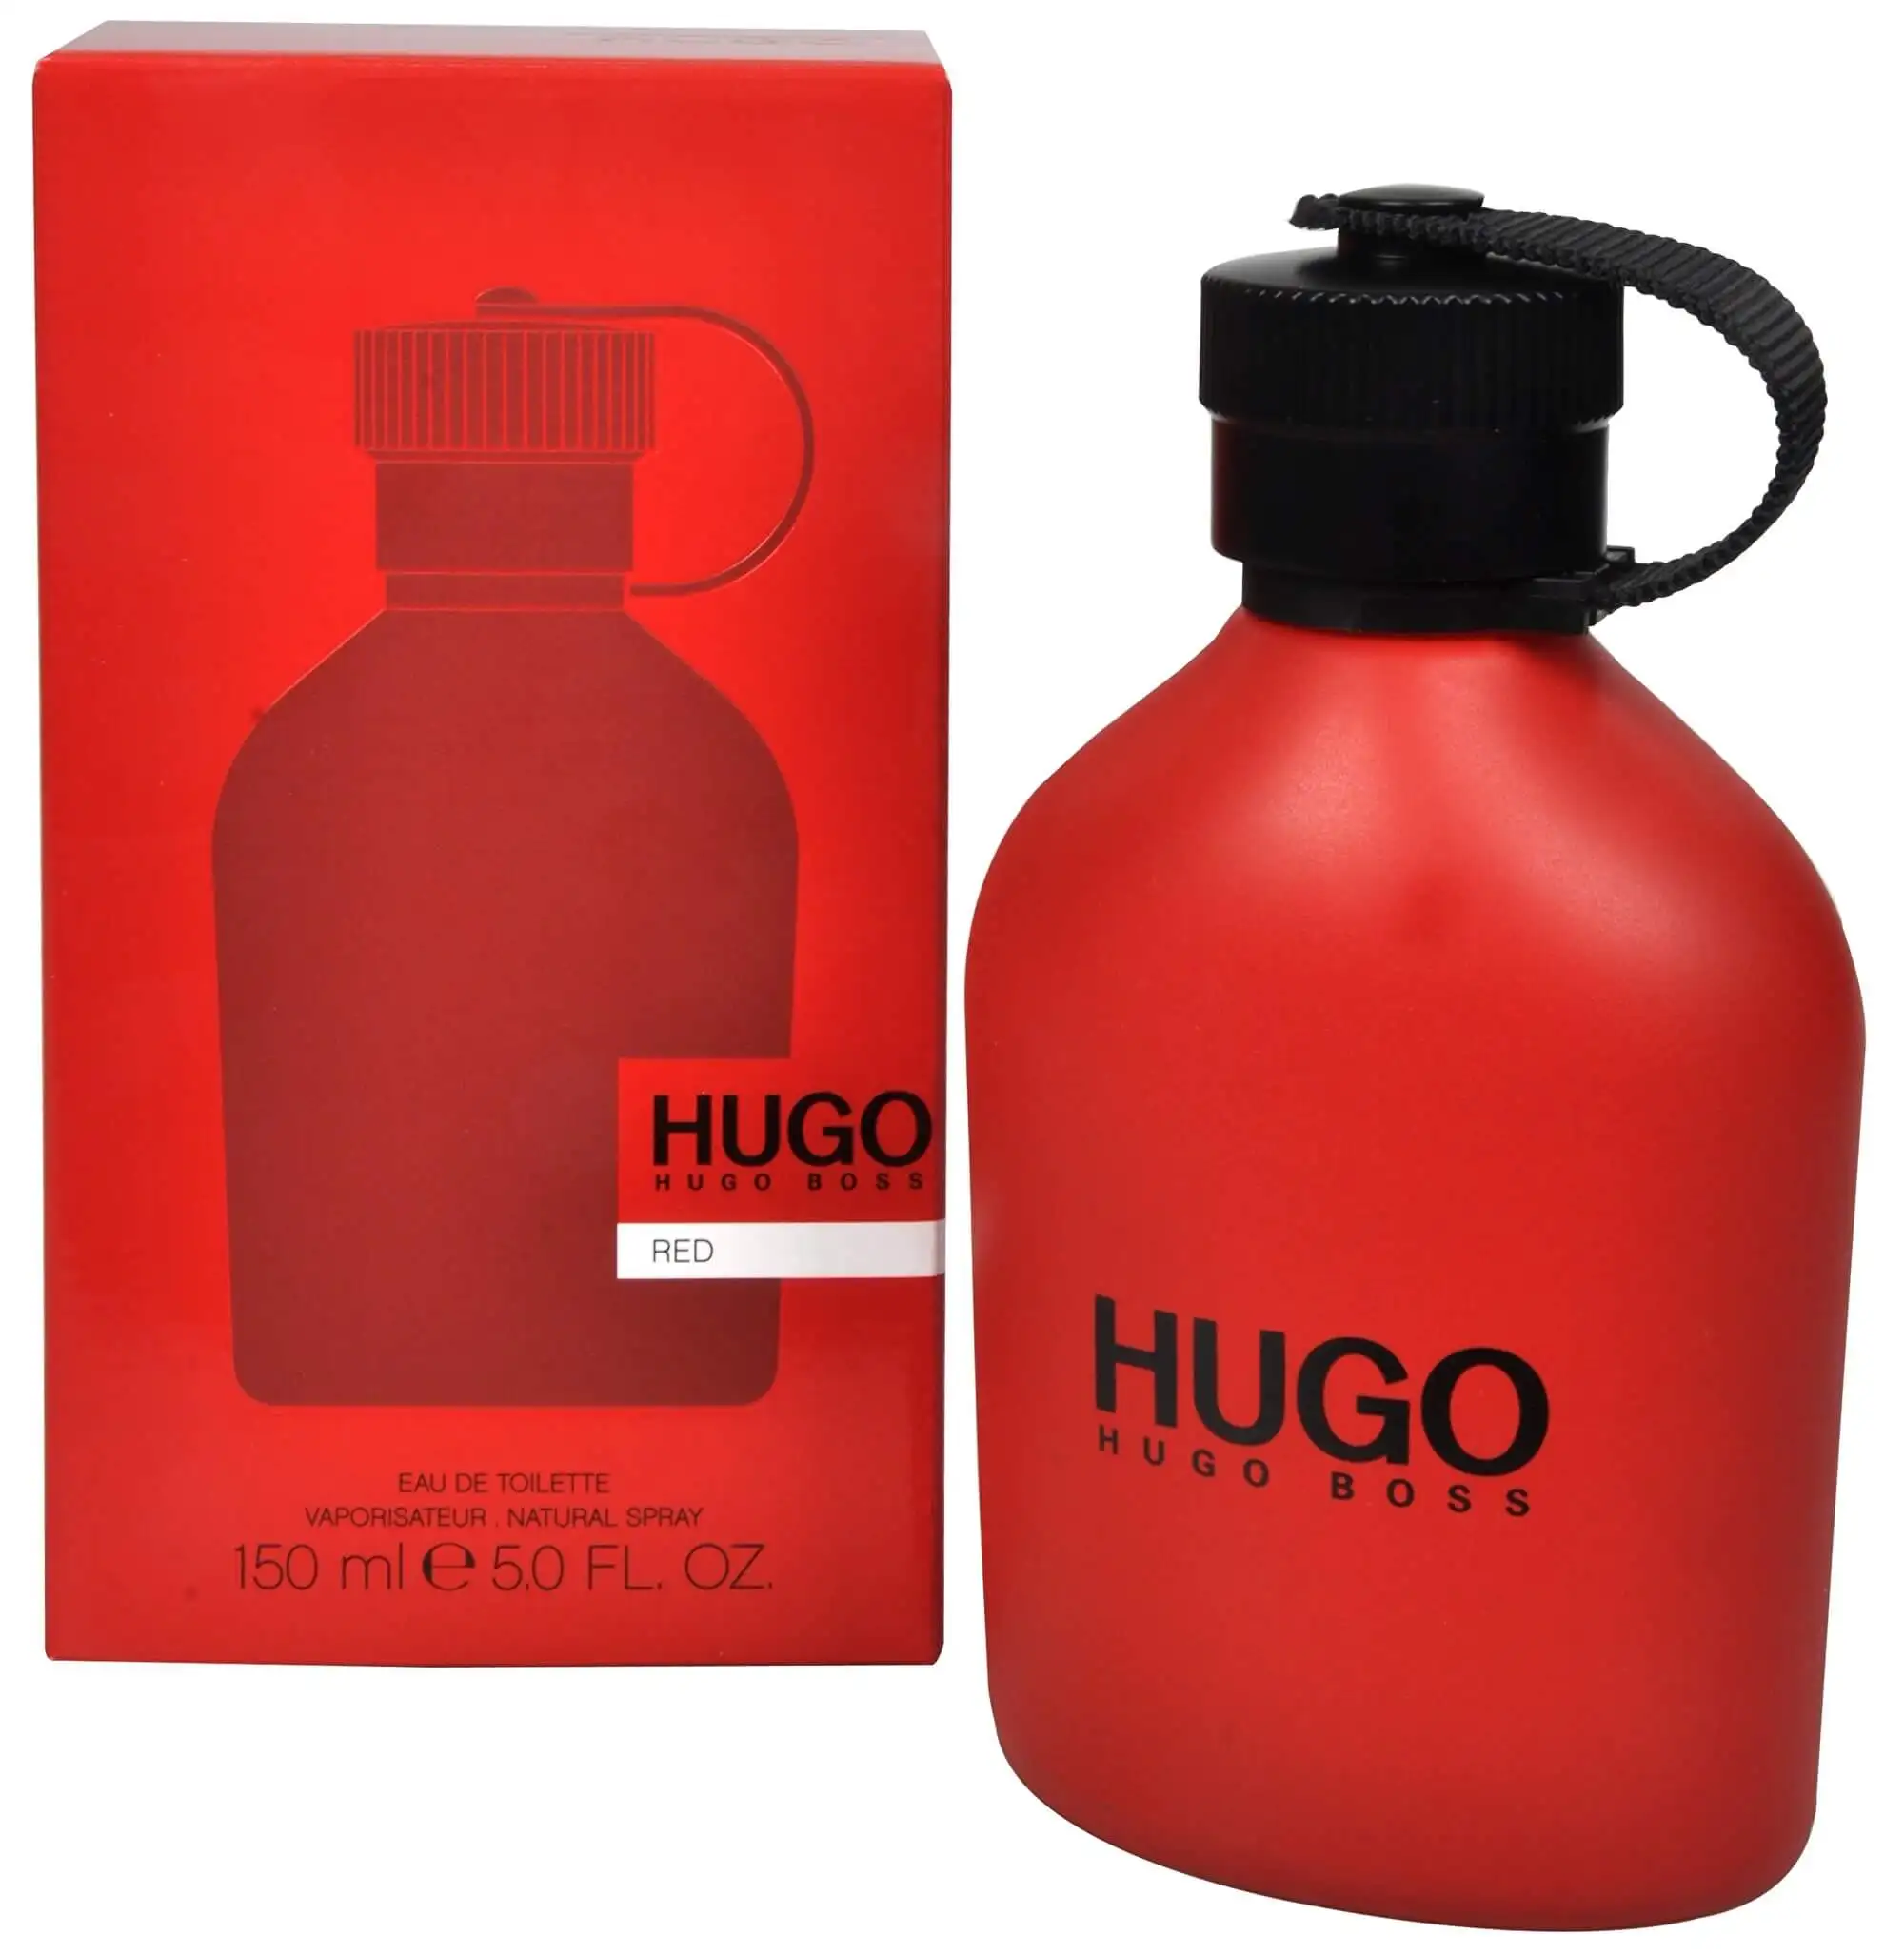 Хуго босс ред. Духи Хьюго босс ред. Хуго босс красный мужской. Hugo Boss женс. Hugo Red (l) (m/b) EDP. Hugo красный духи мужские.